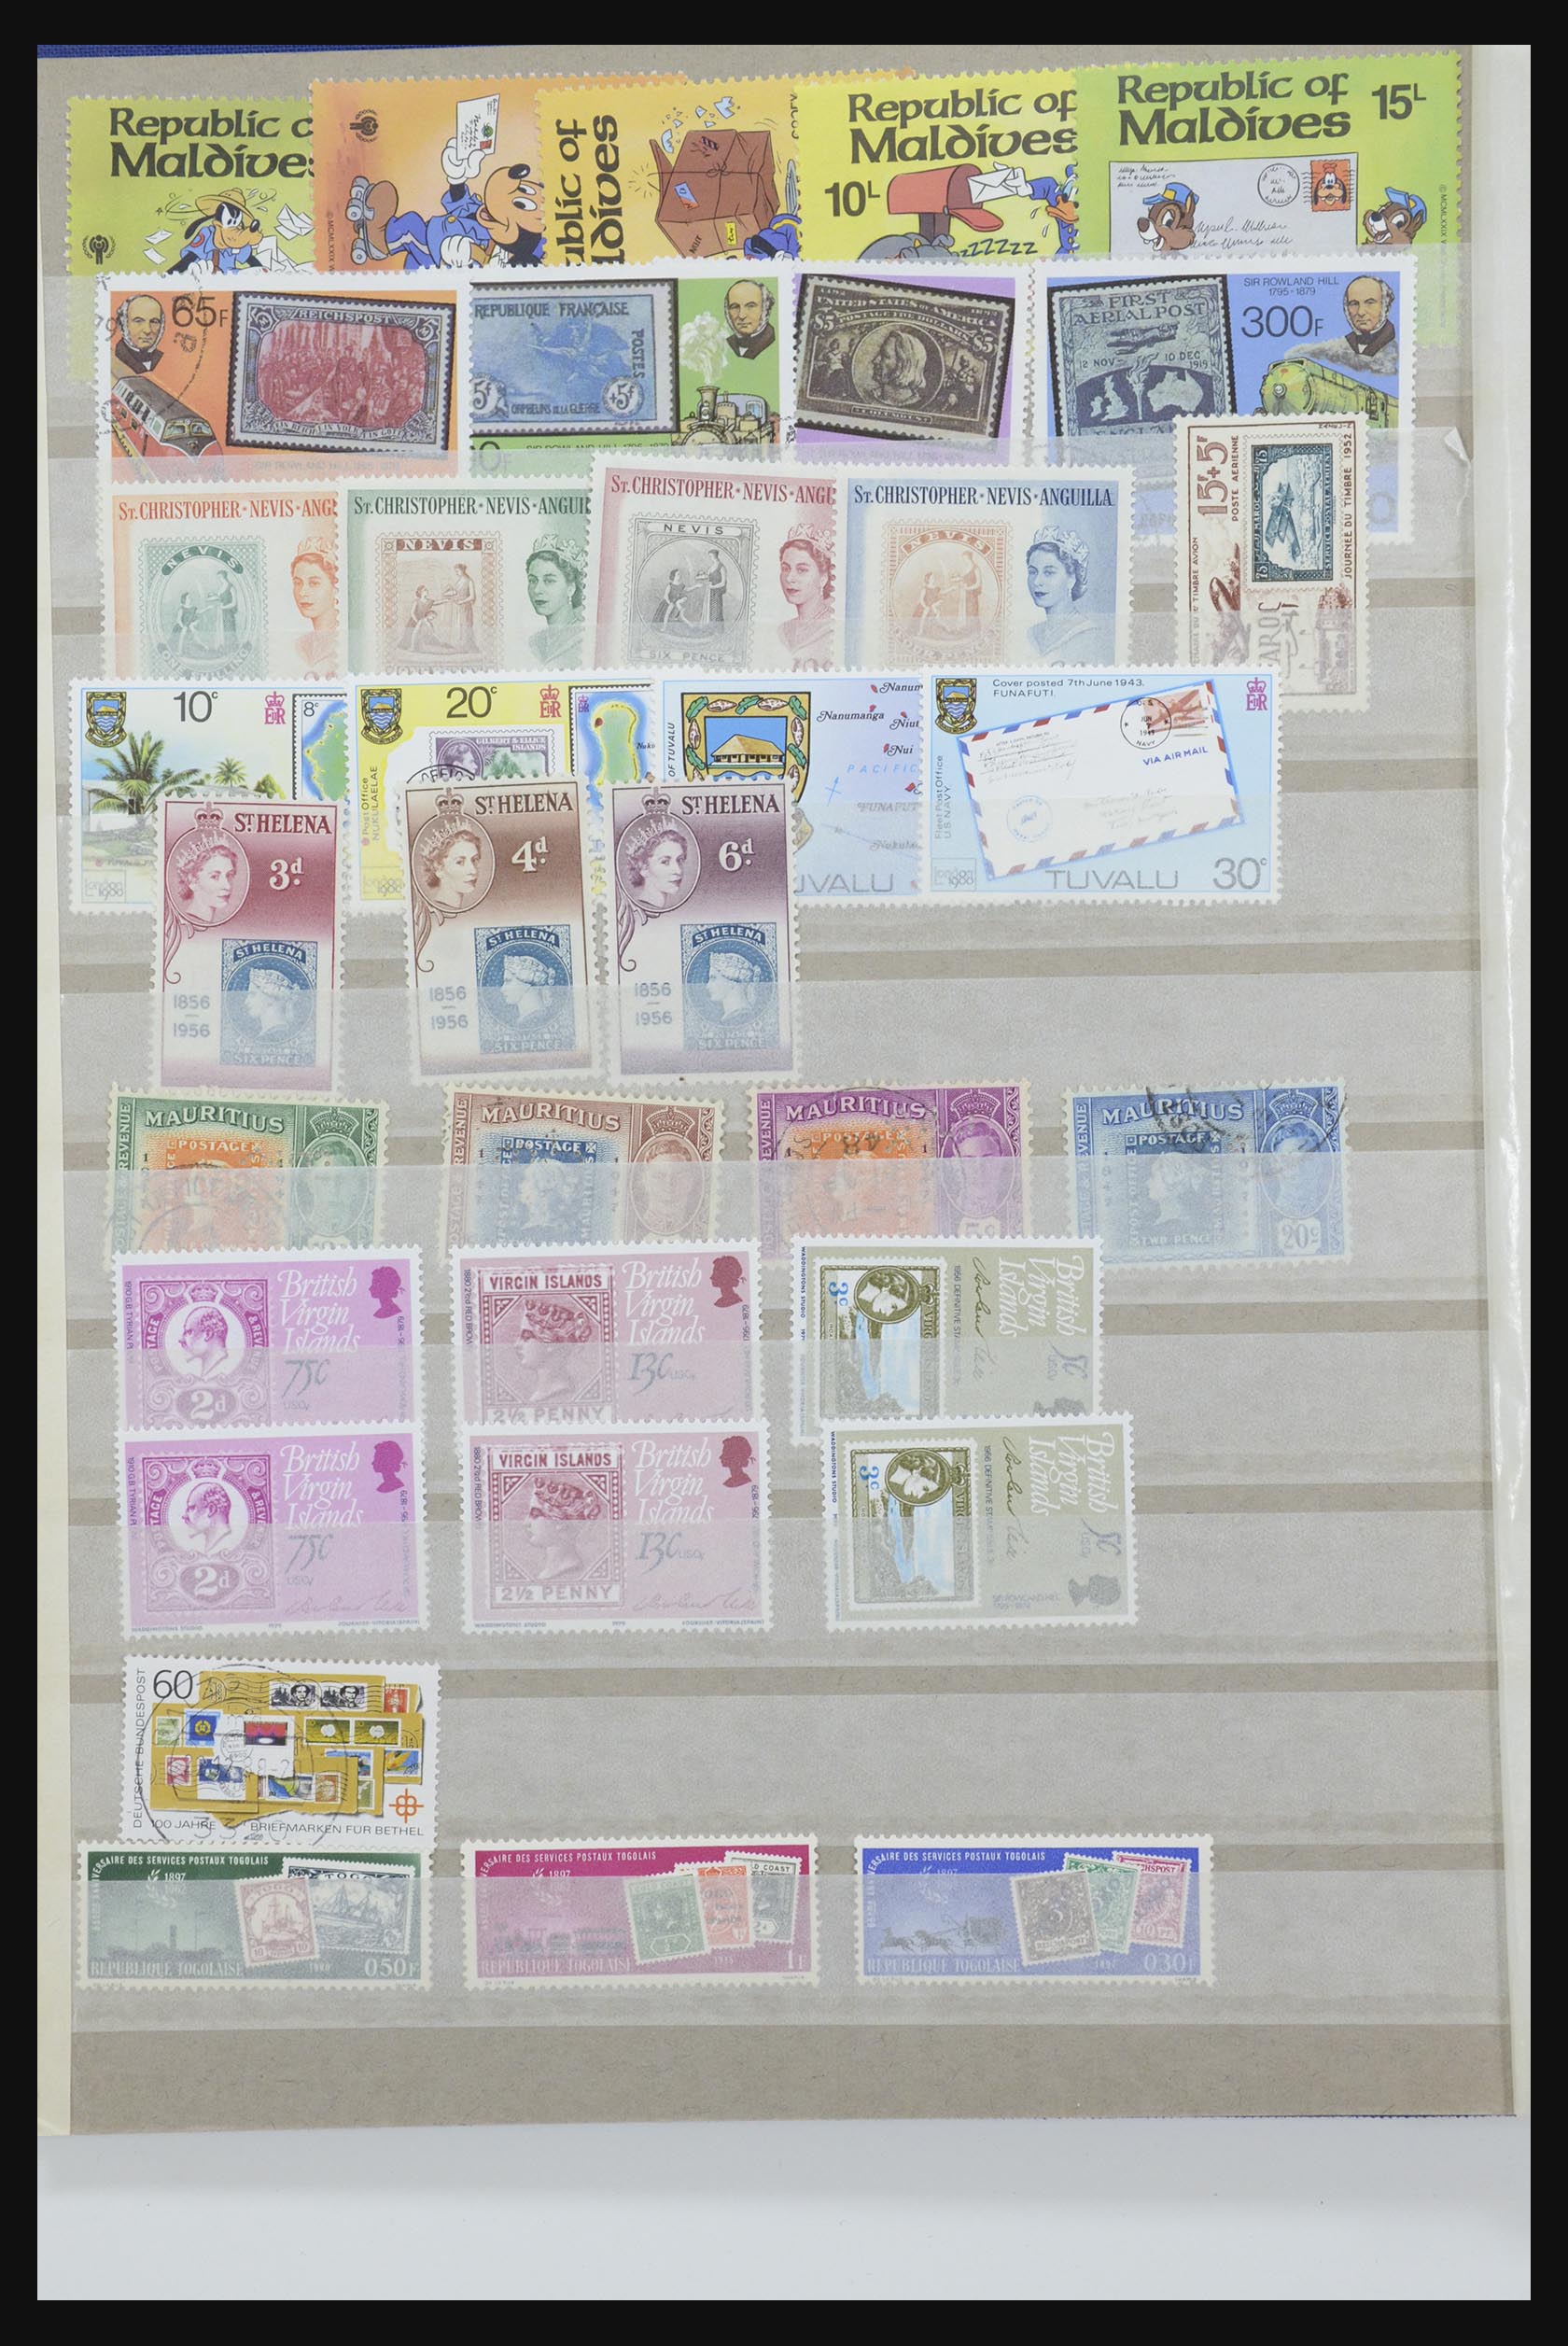 31652 092 - 31652 Motief: postzegel op postzegel 1940-1993.